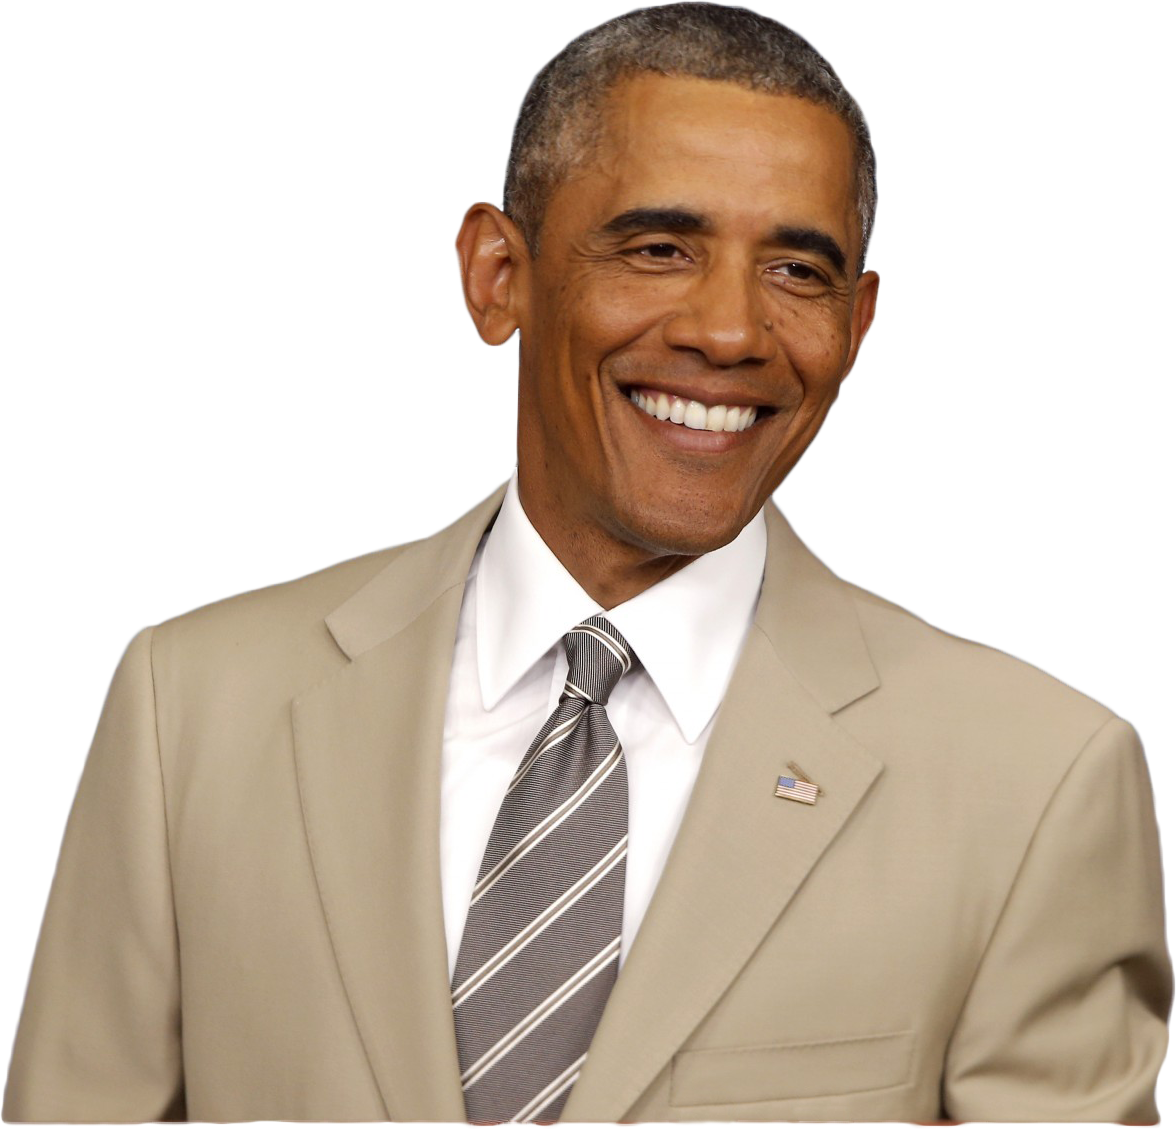 Barak obama PNG изображение фон